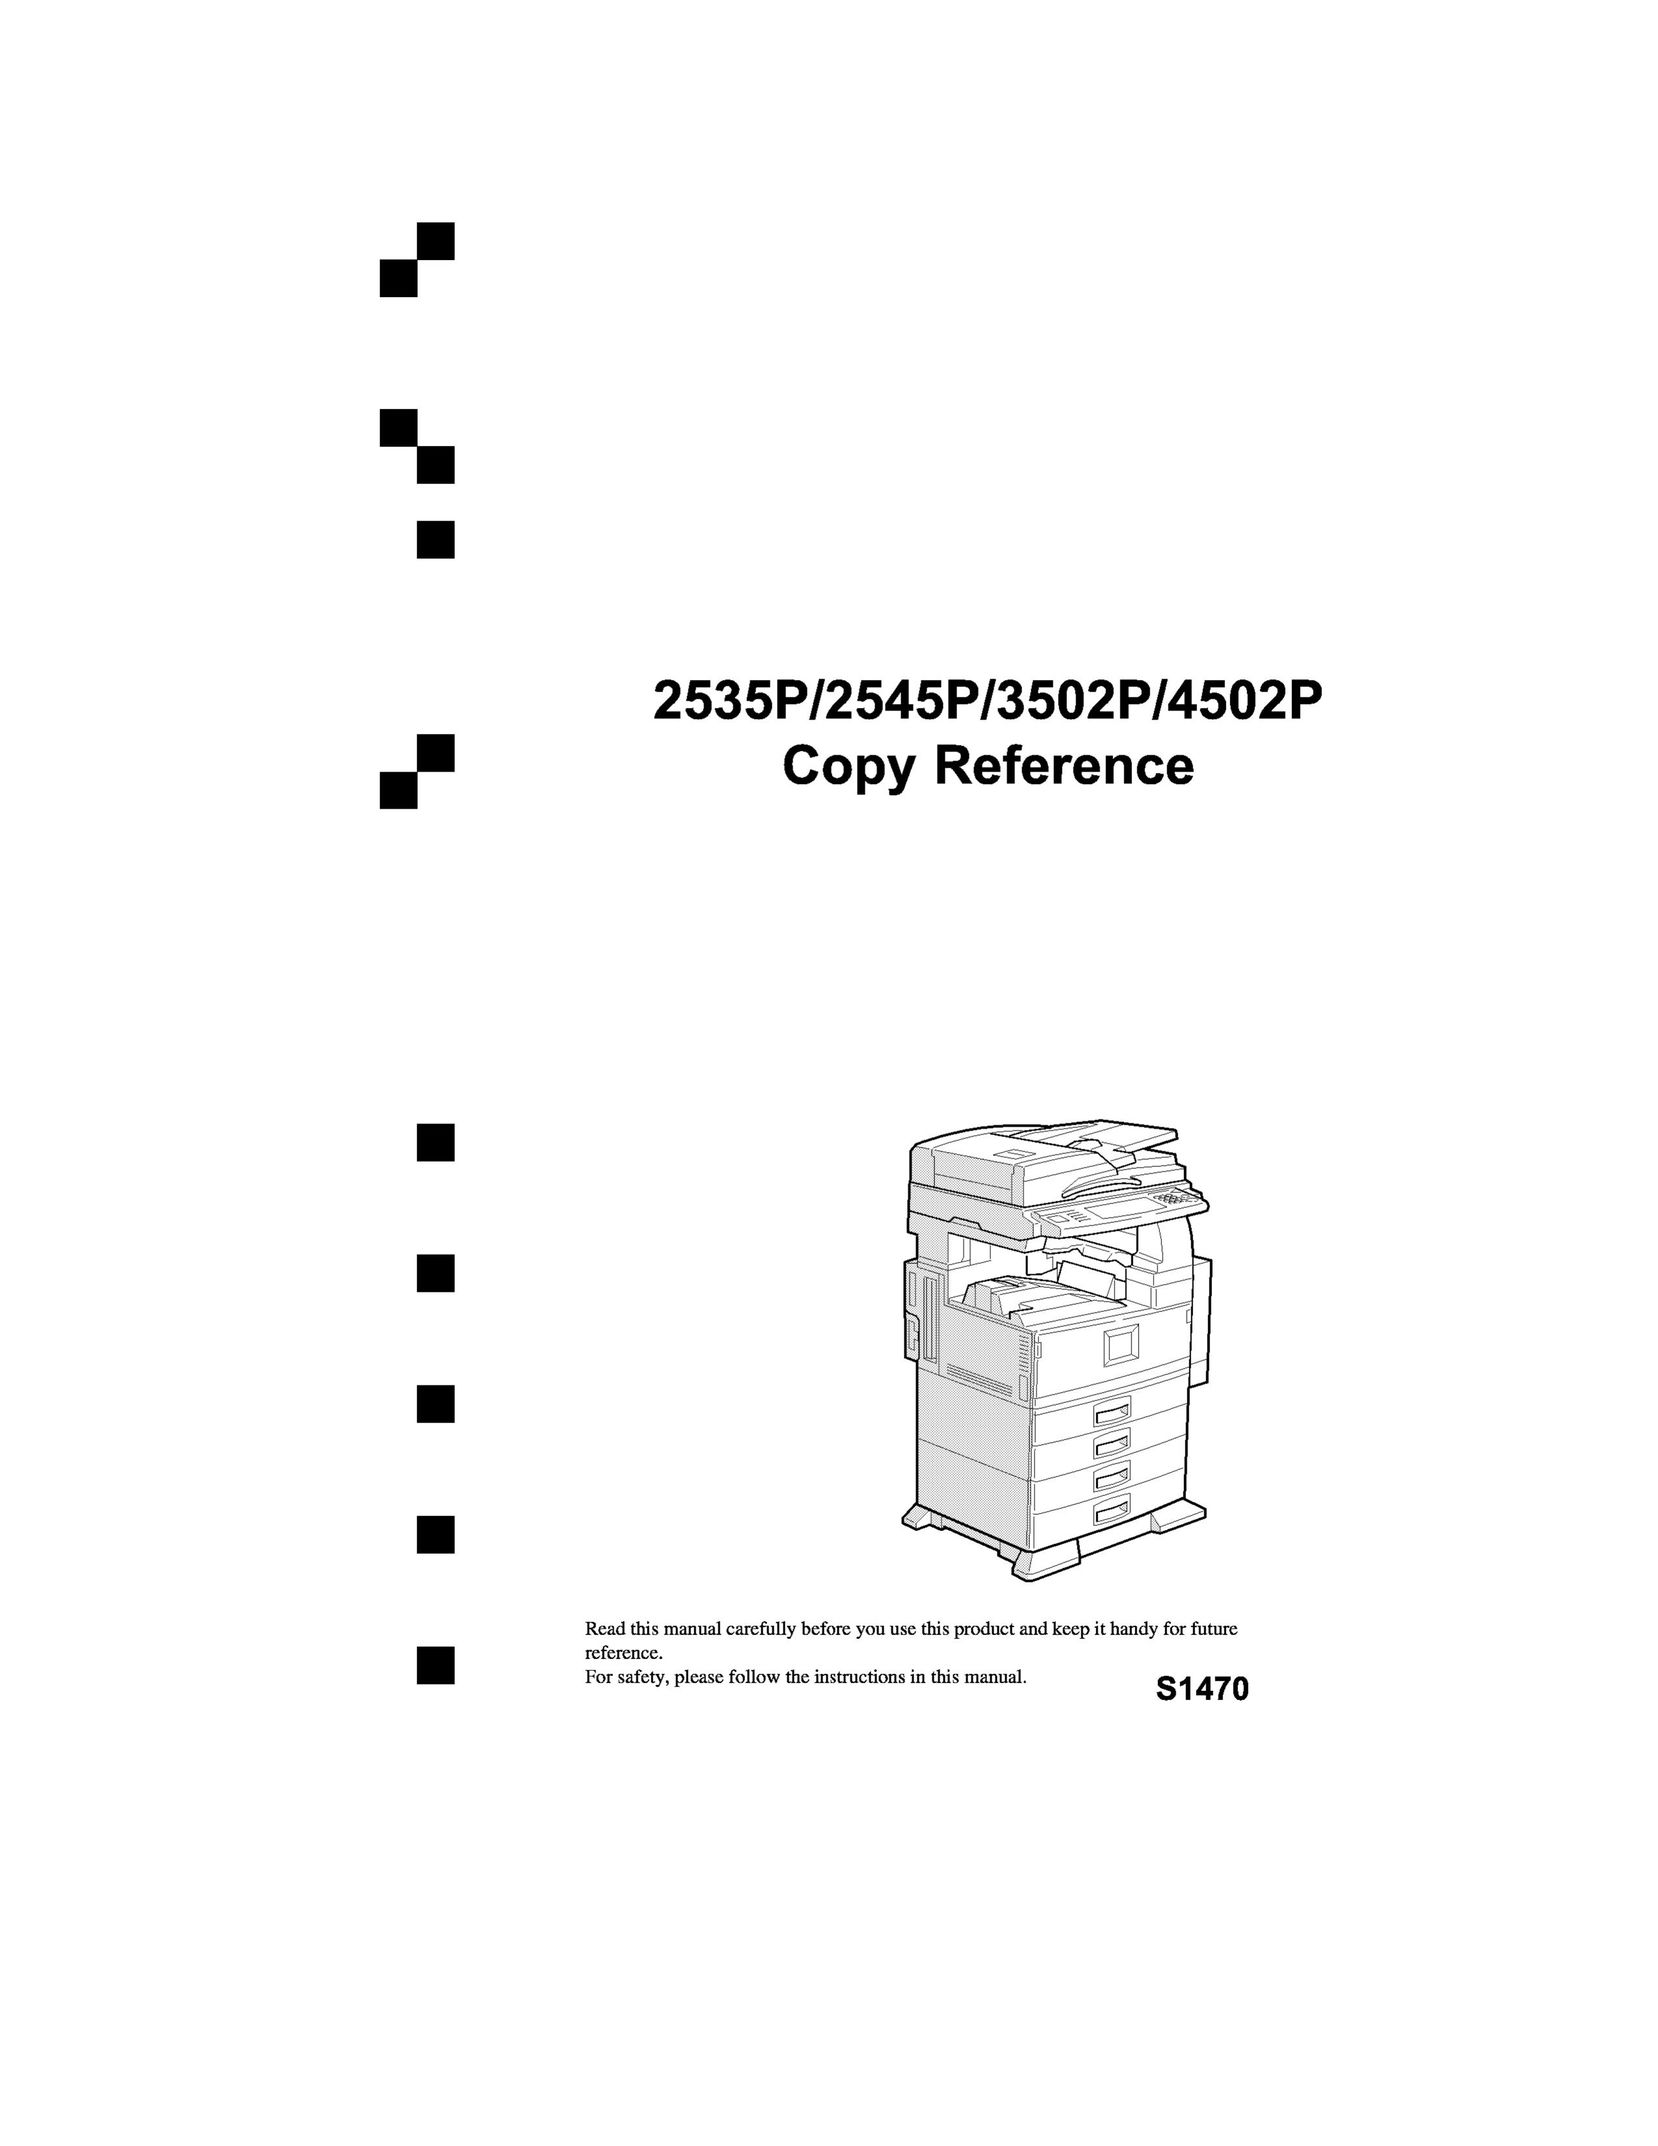 Savin 4502P All in One Printer User Manual